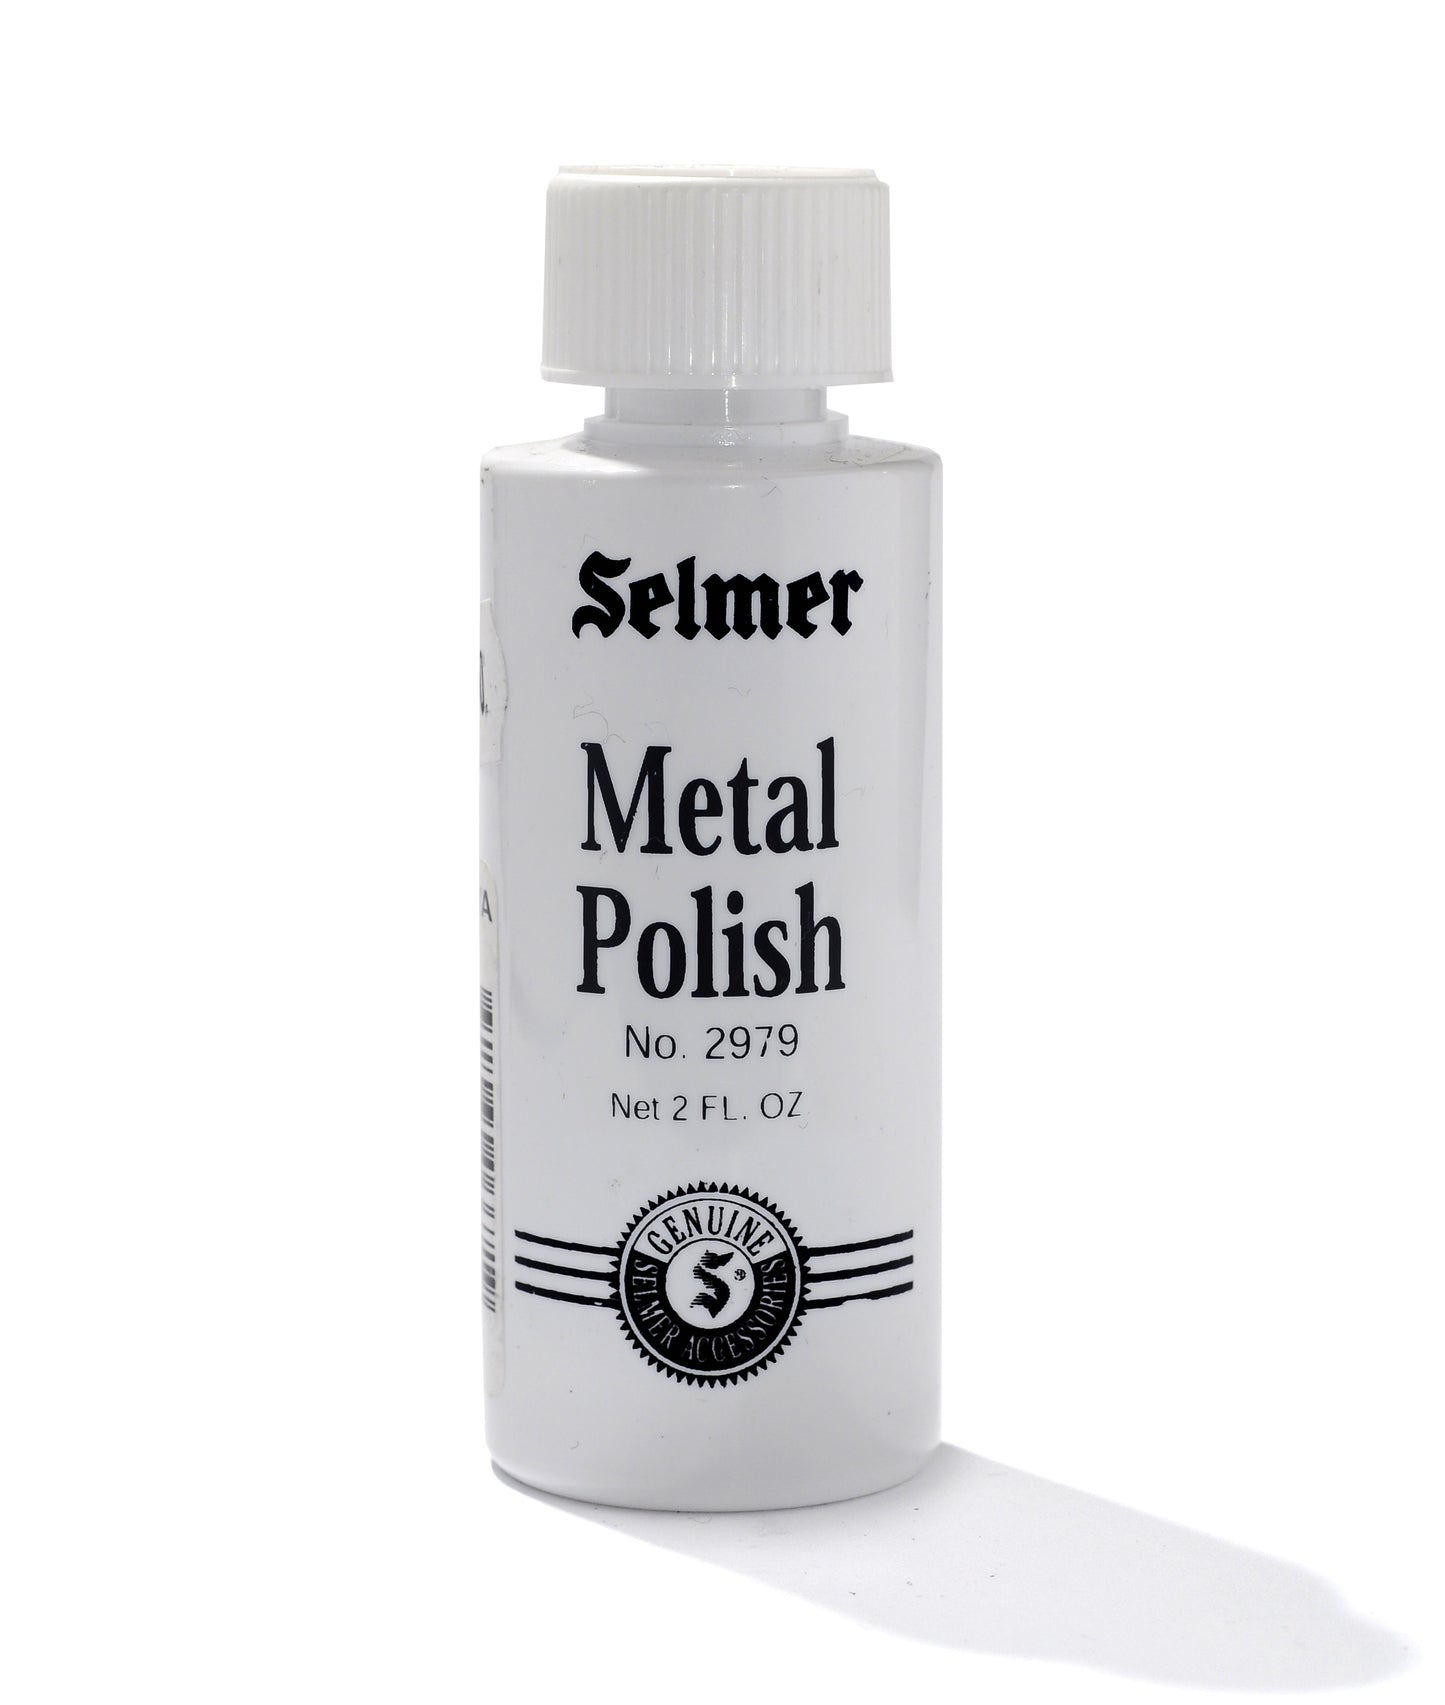 Selmer 2977 Metal Polish for Gold Silver or Nickel, 2 Oz Bottle